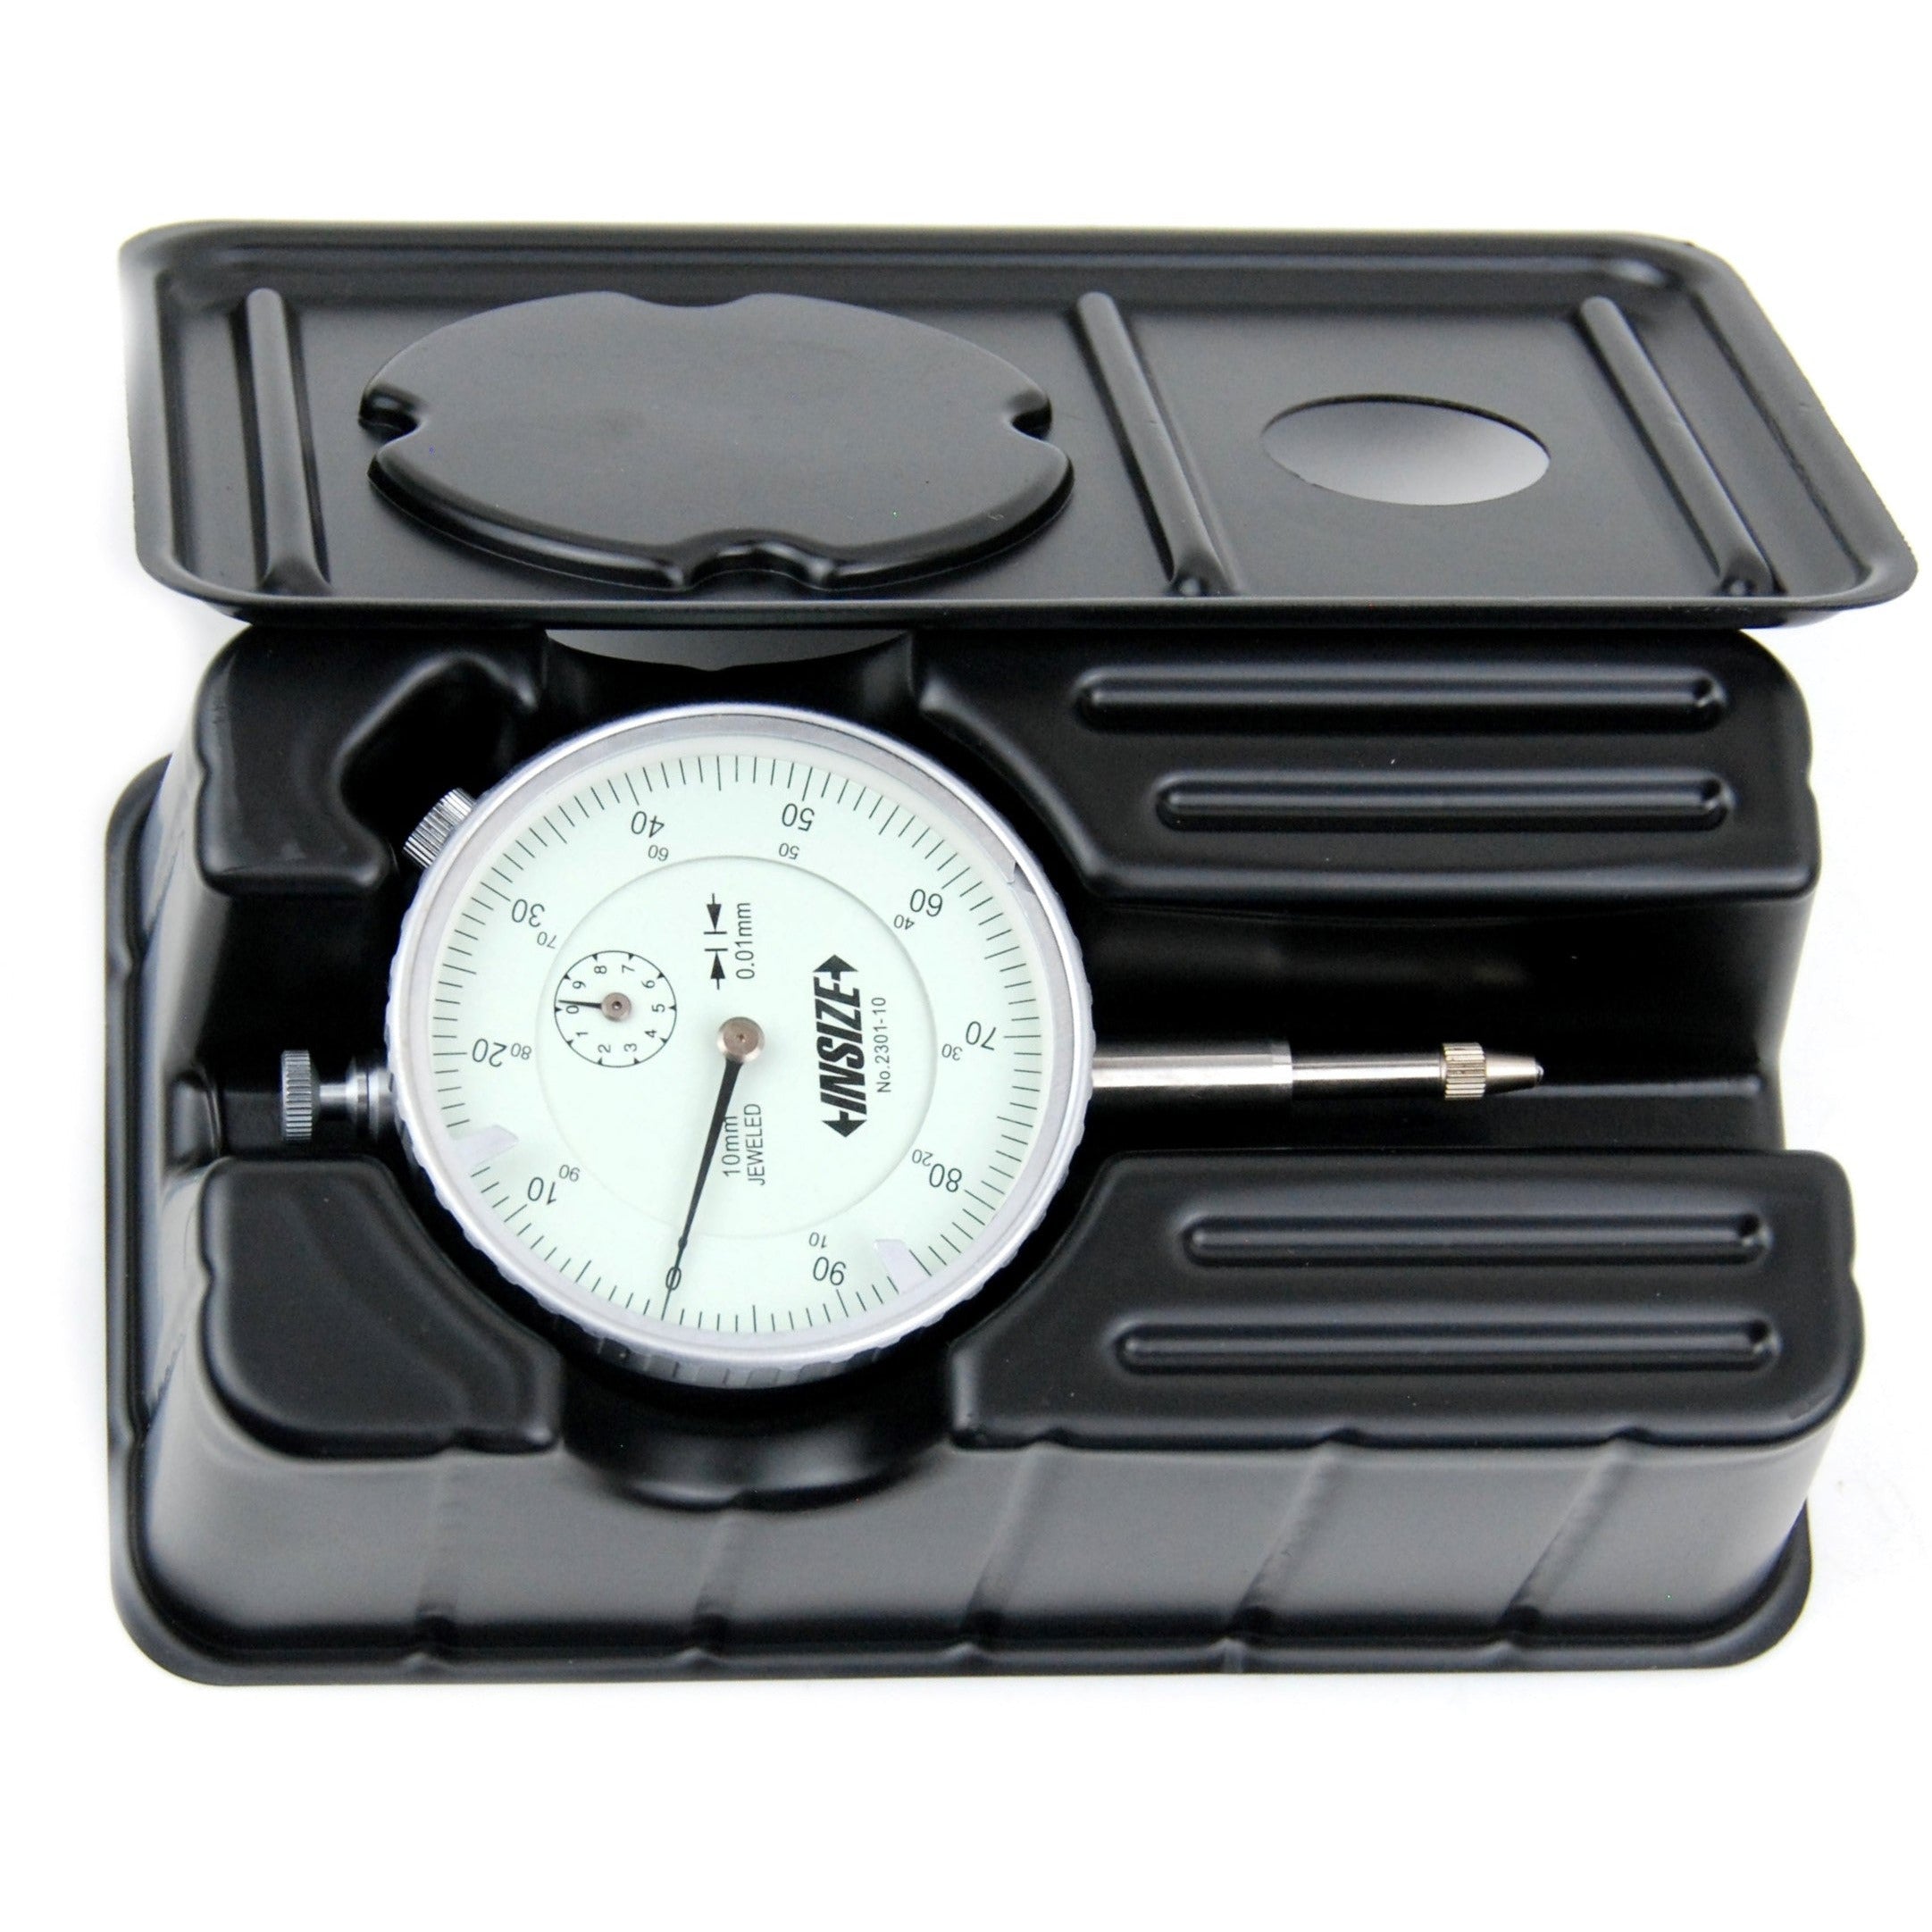 Insize Metric Lug Back Dial Indicator 10mm Range Series 2301-10